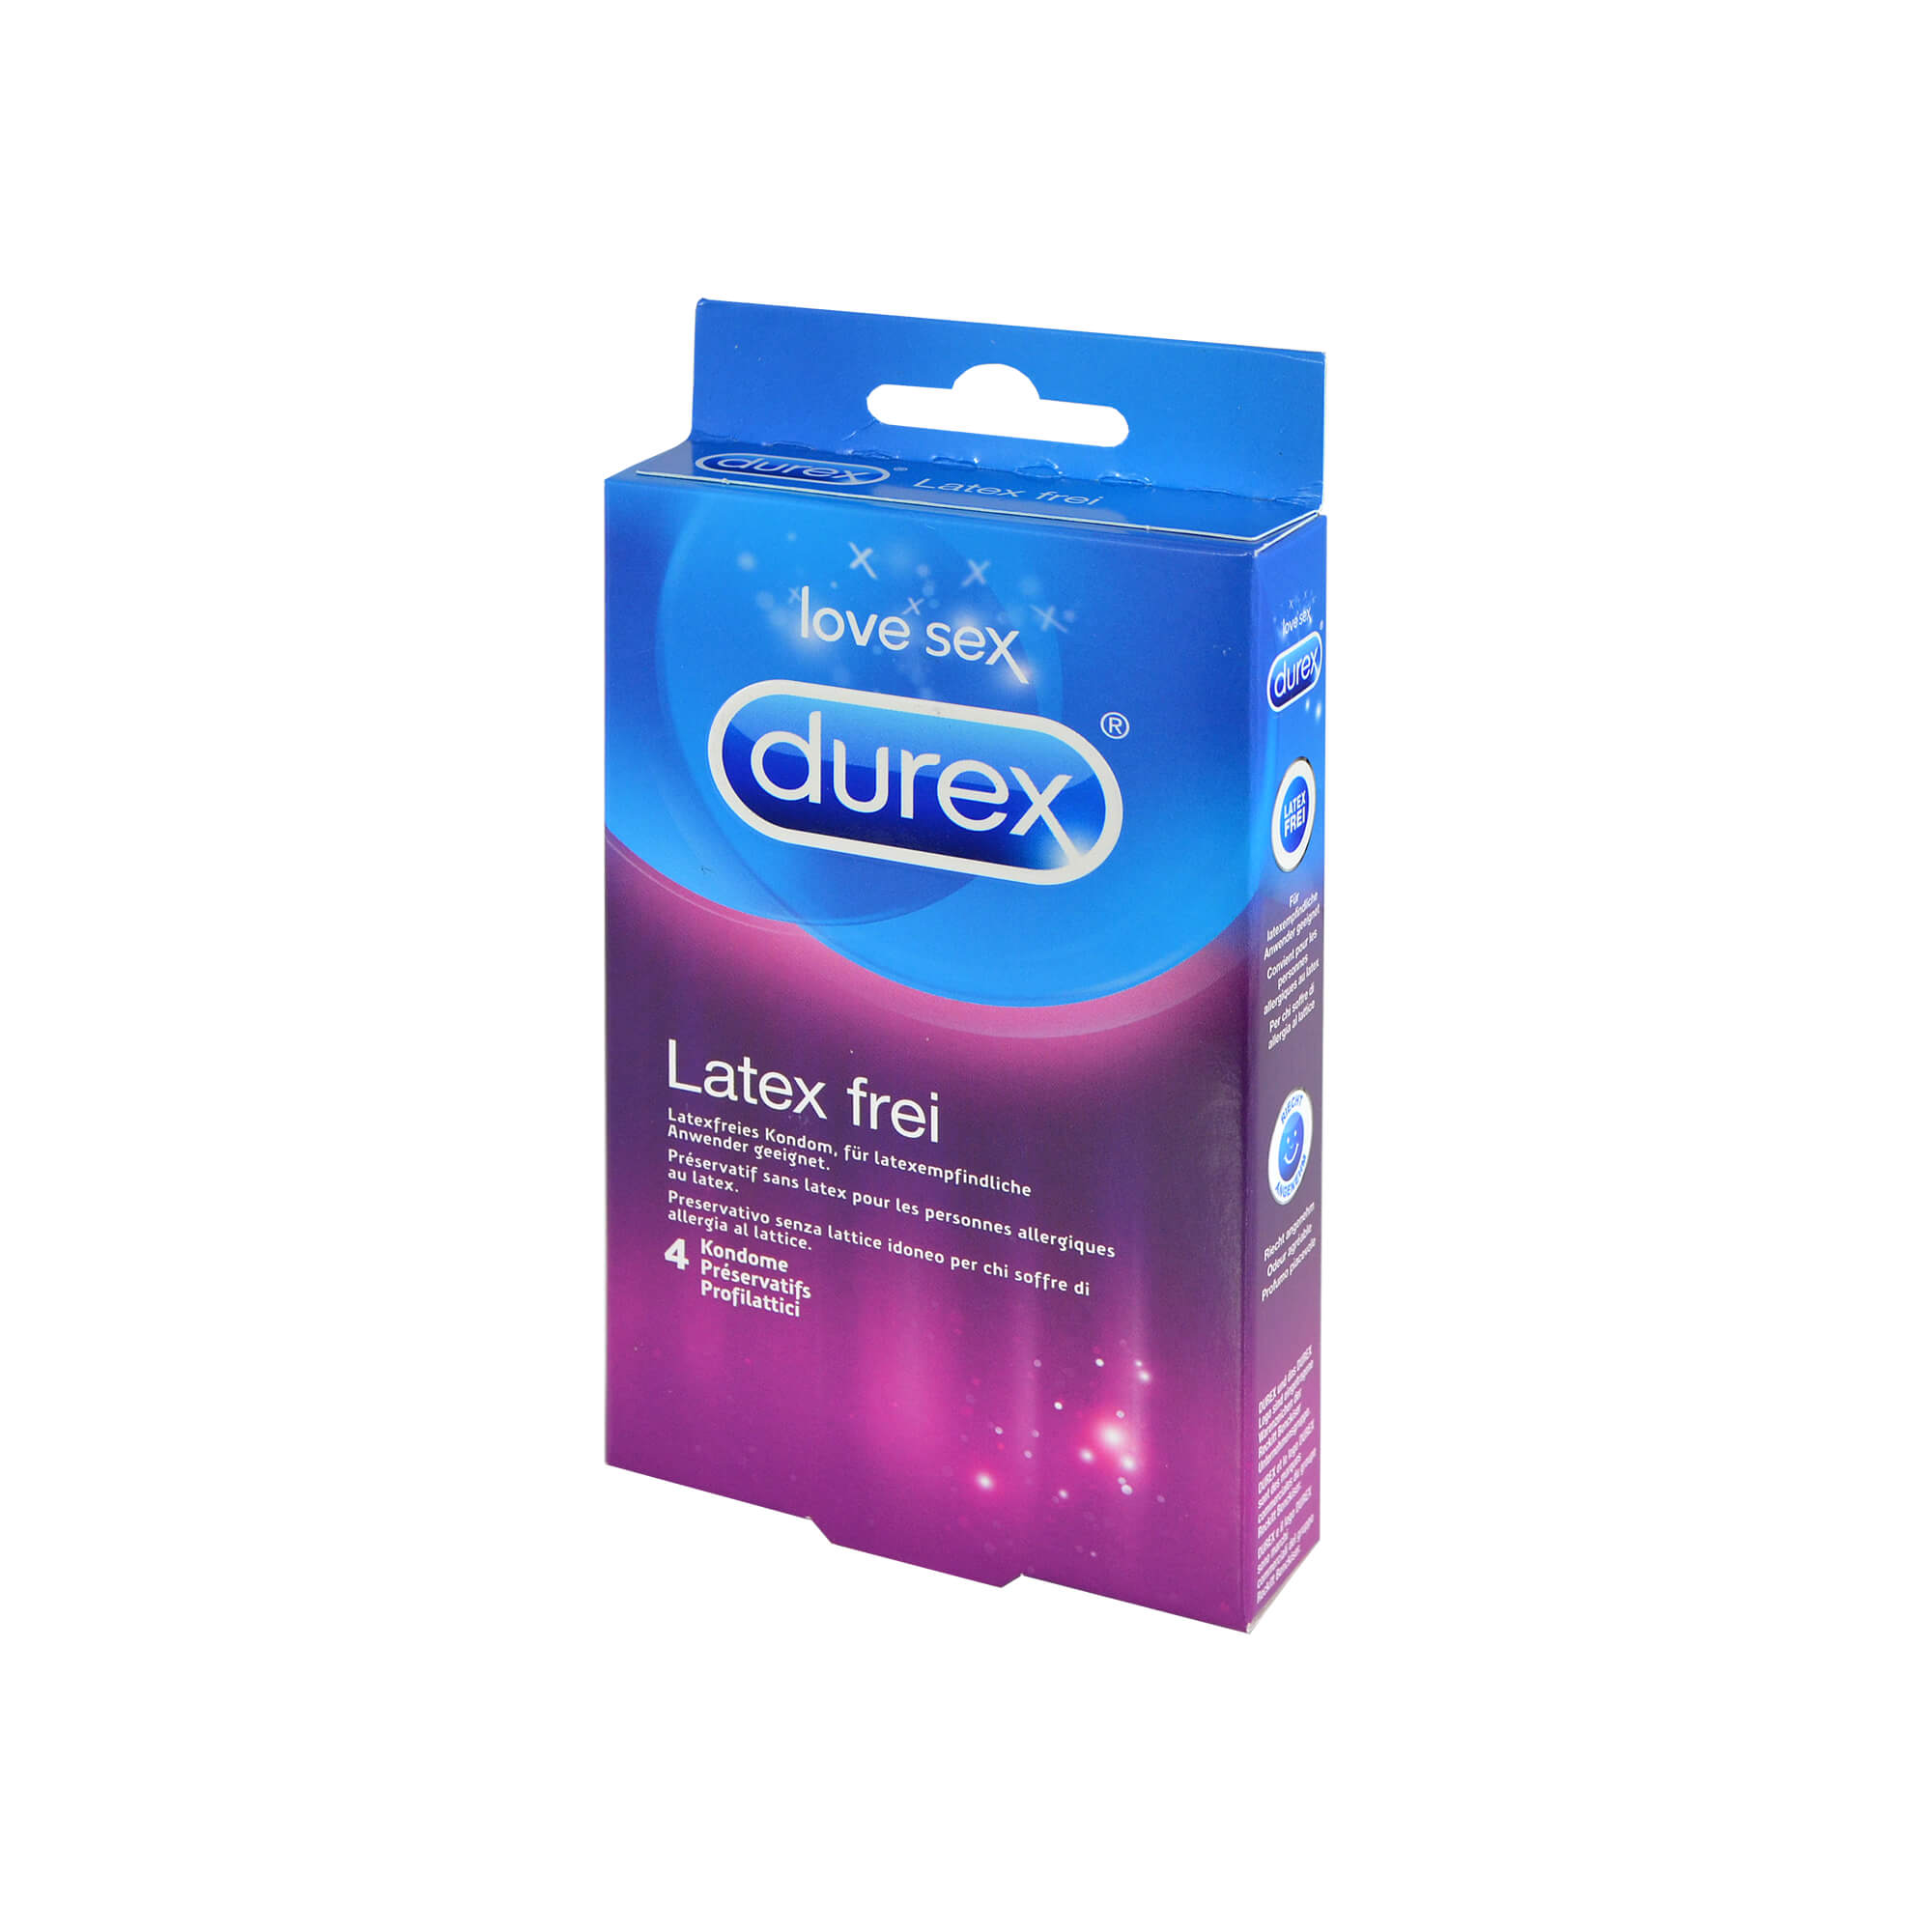 Latexfreies Kondom aus Polyisopren, nominale Breite: 56 mm.